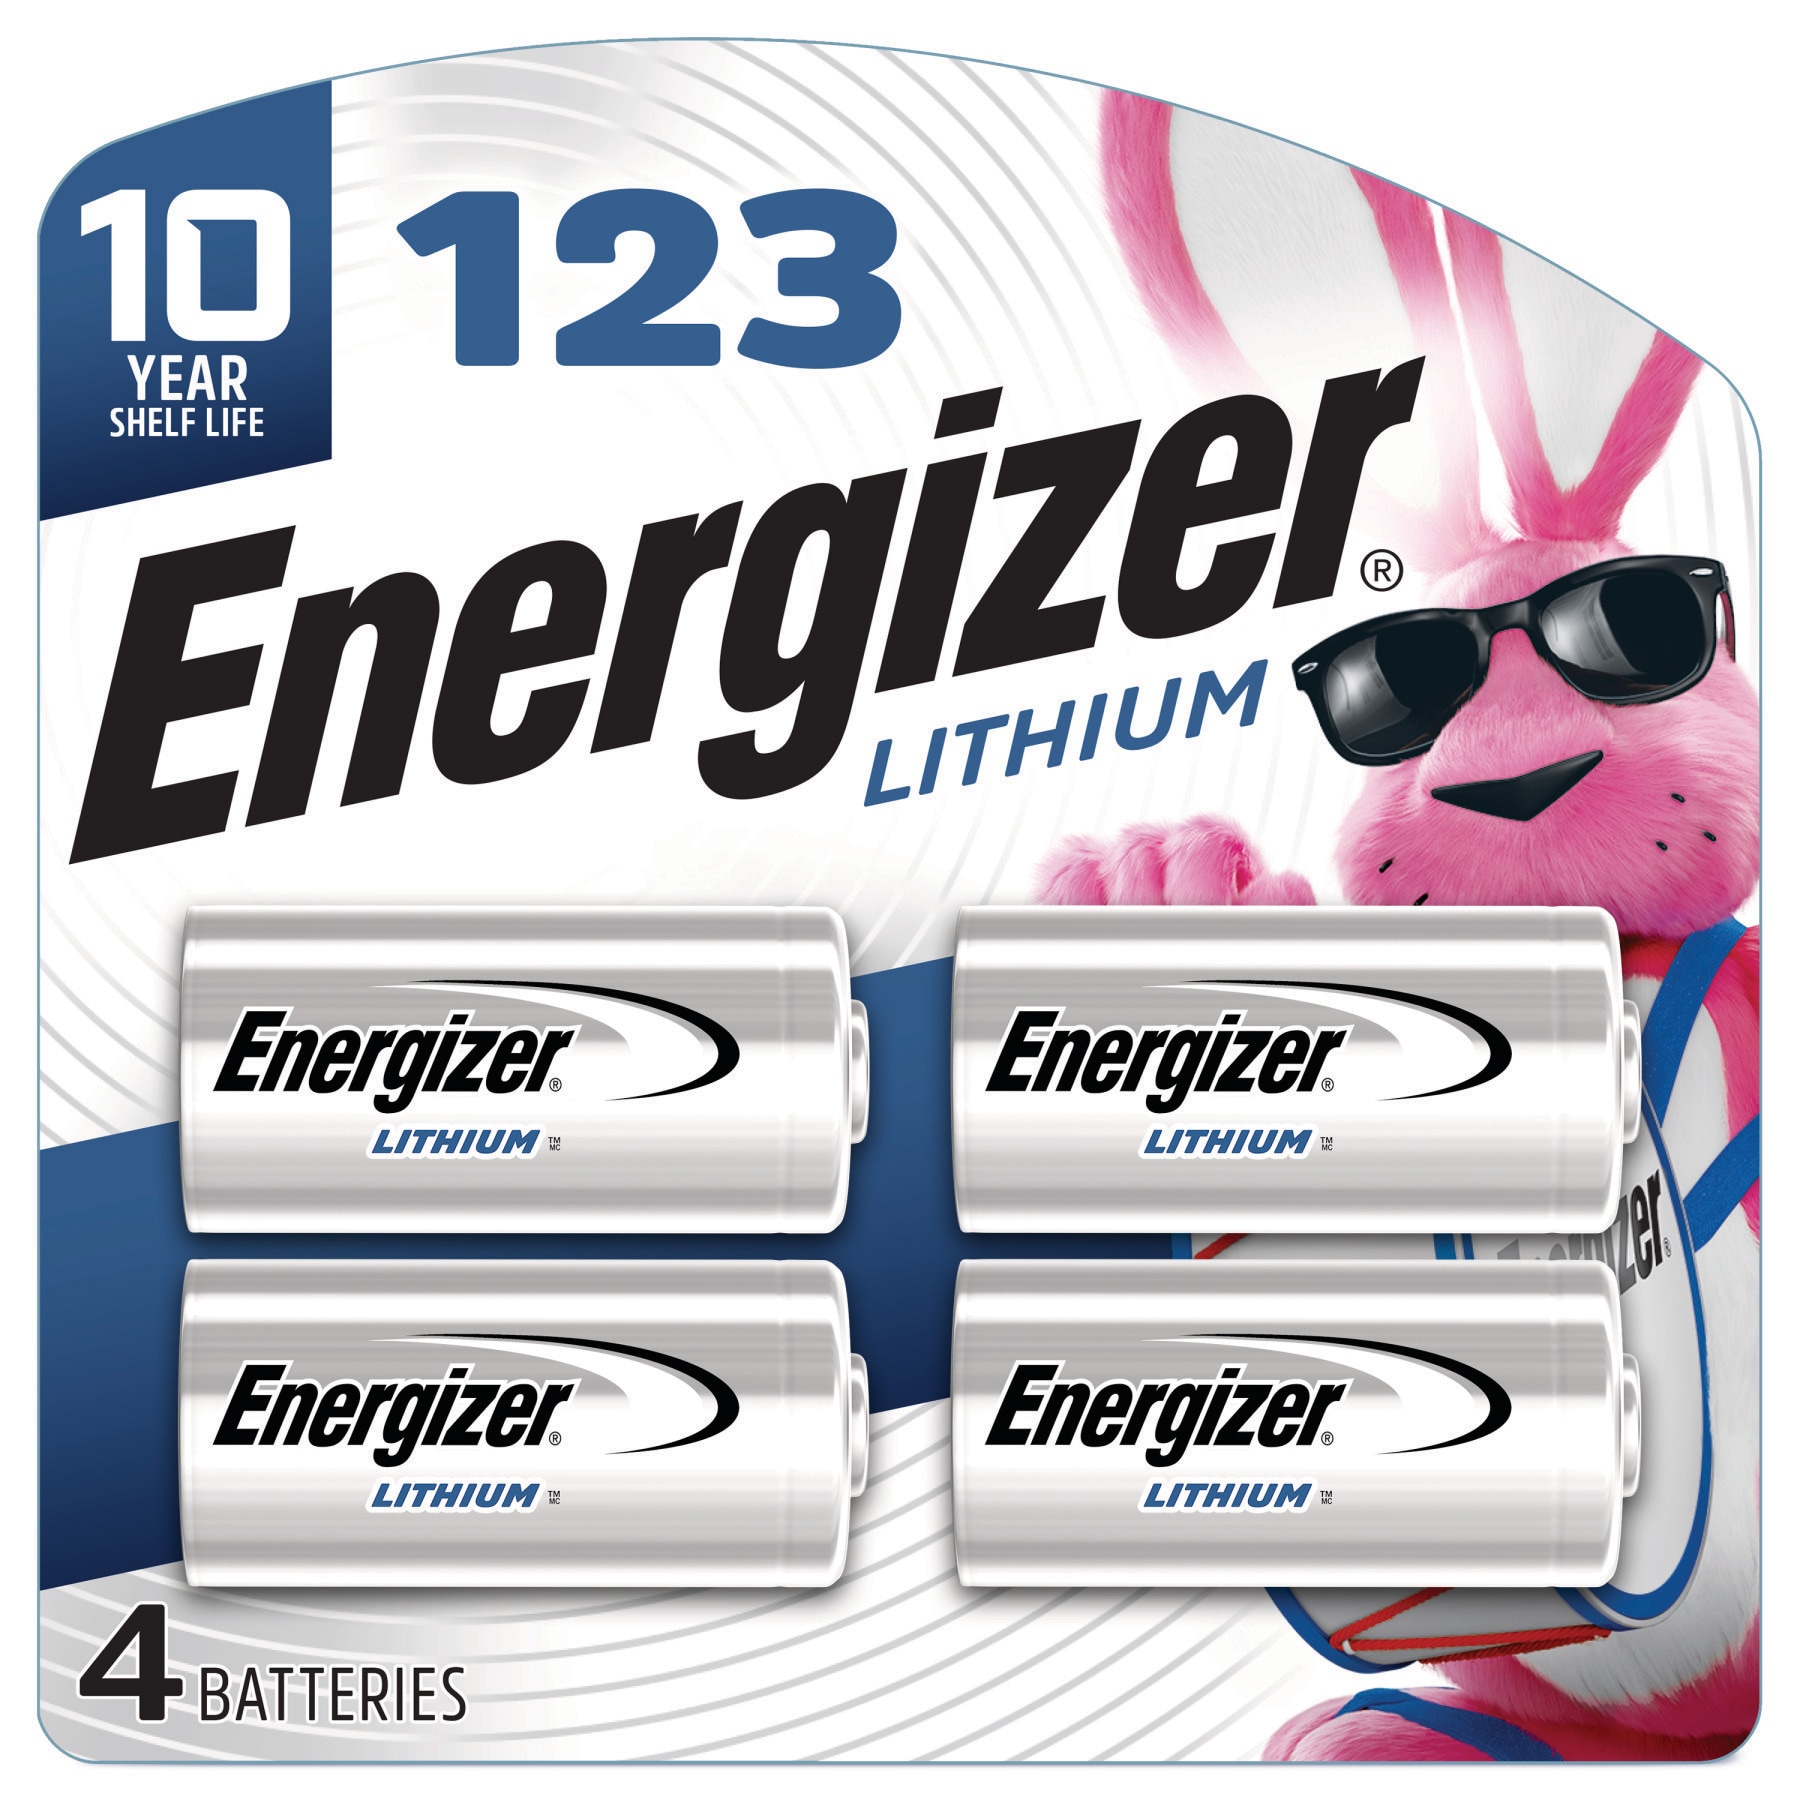 Energizer Lithium Batteries 2032 - 6 pack